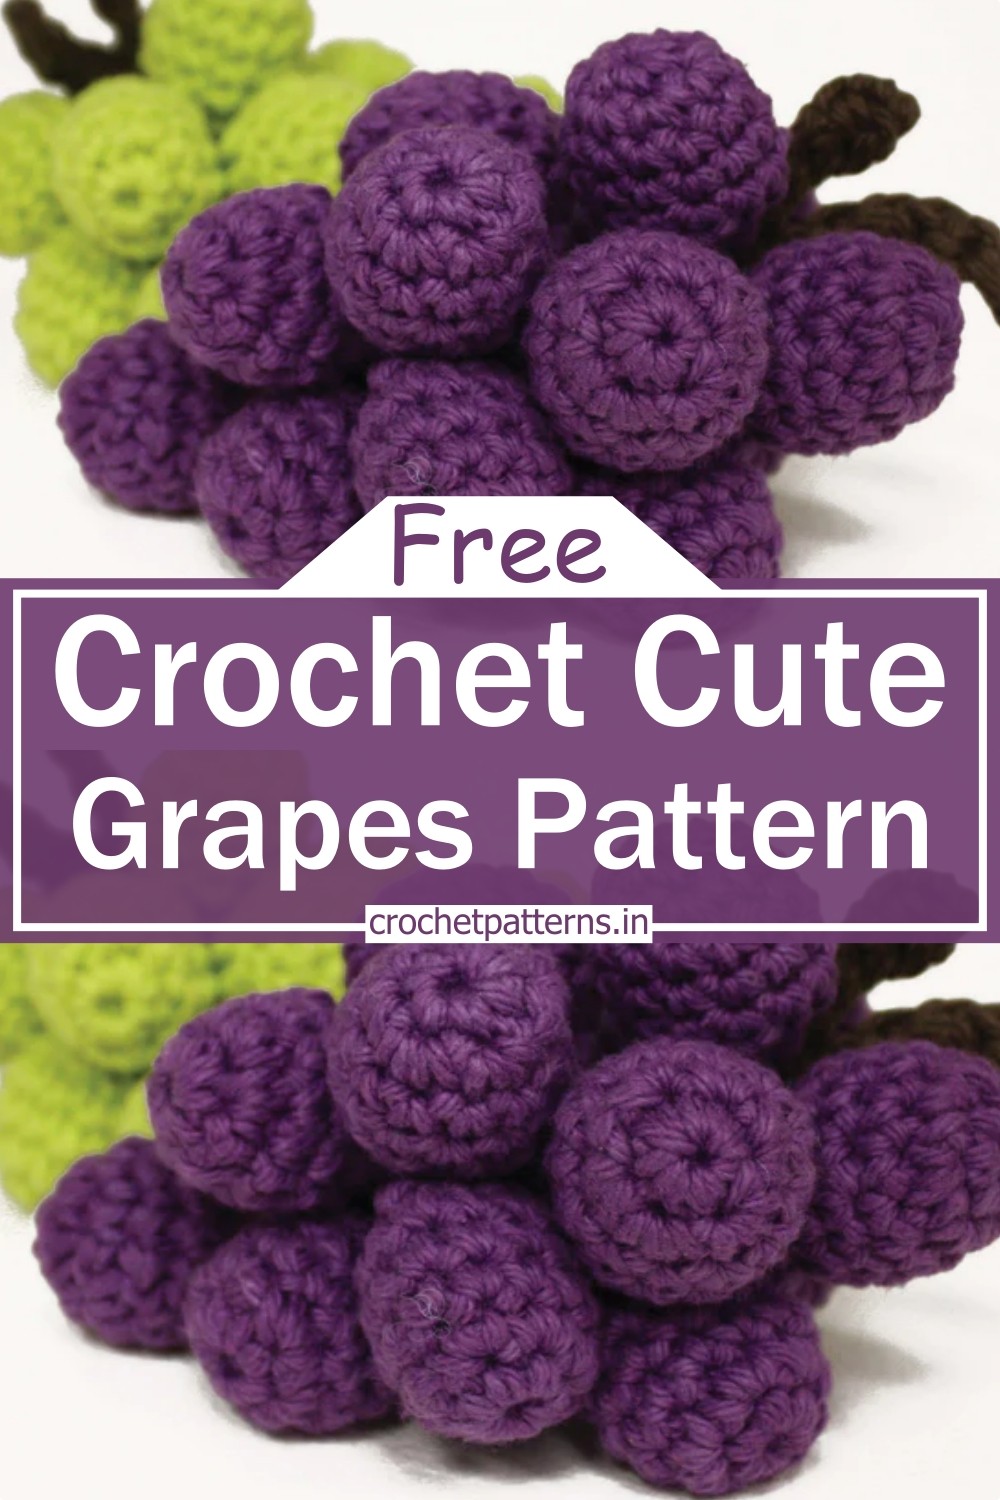 Crochet Cute Grapes Pattern 